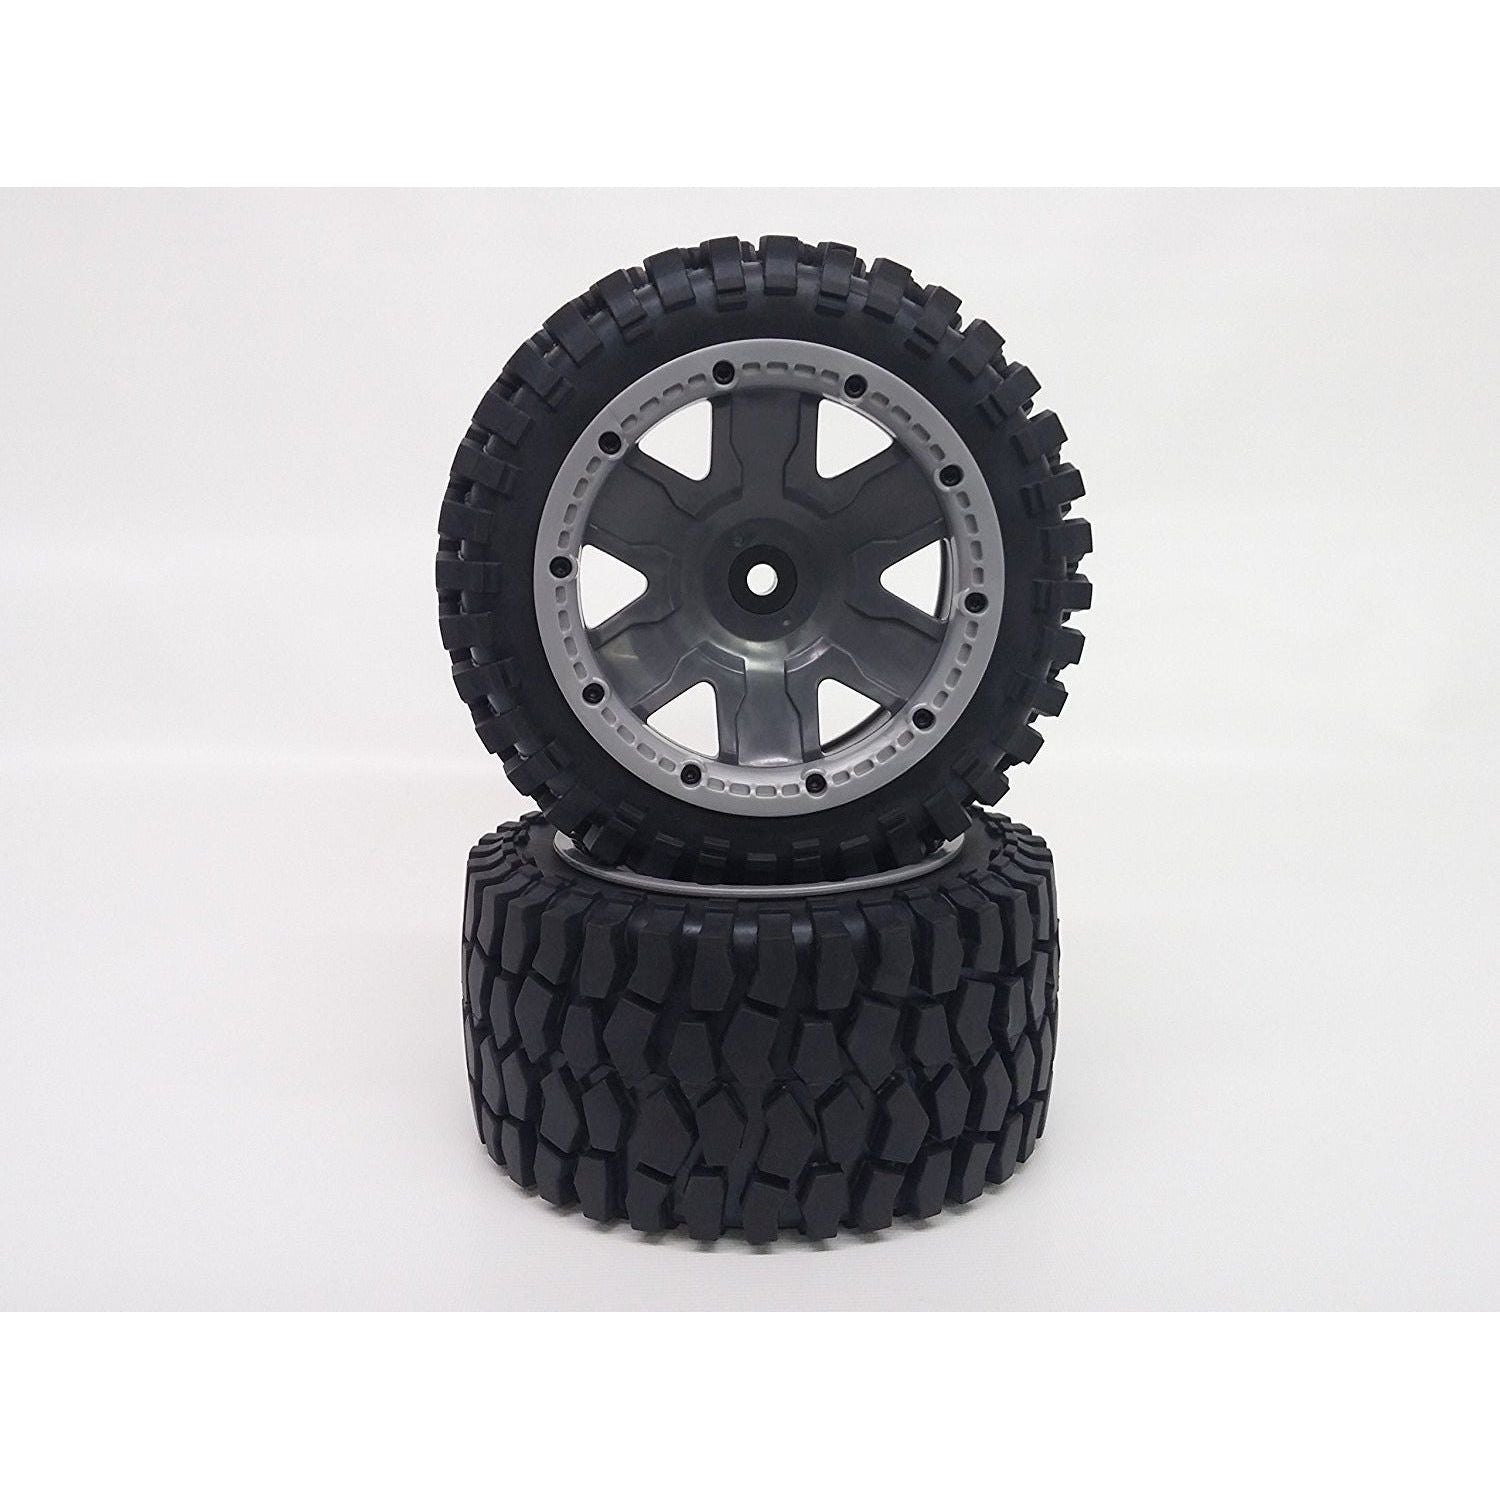 K-Rock Tires & Yuma Rims with Beadlocks - Rear (1 Pair) (Choose Color)